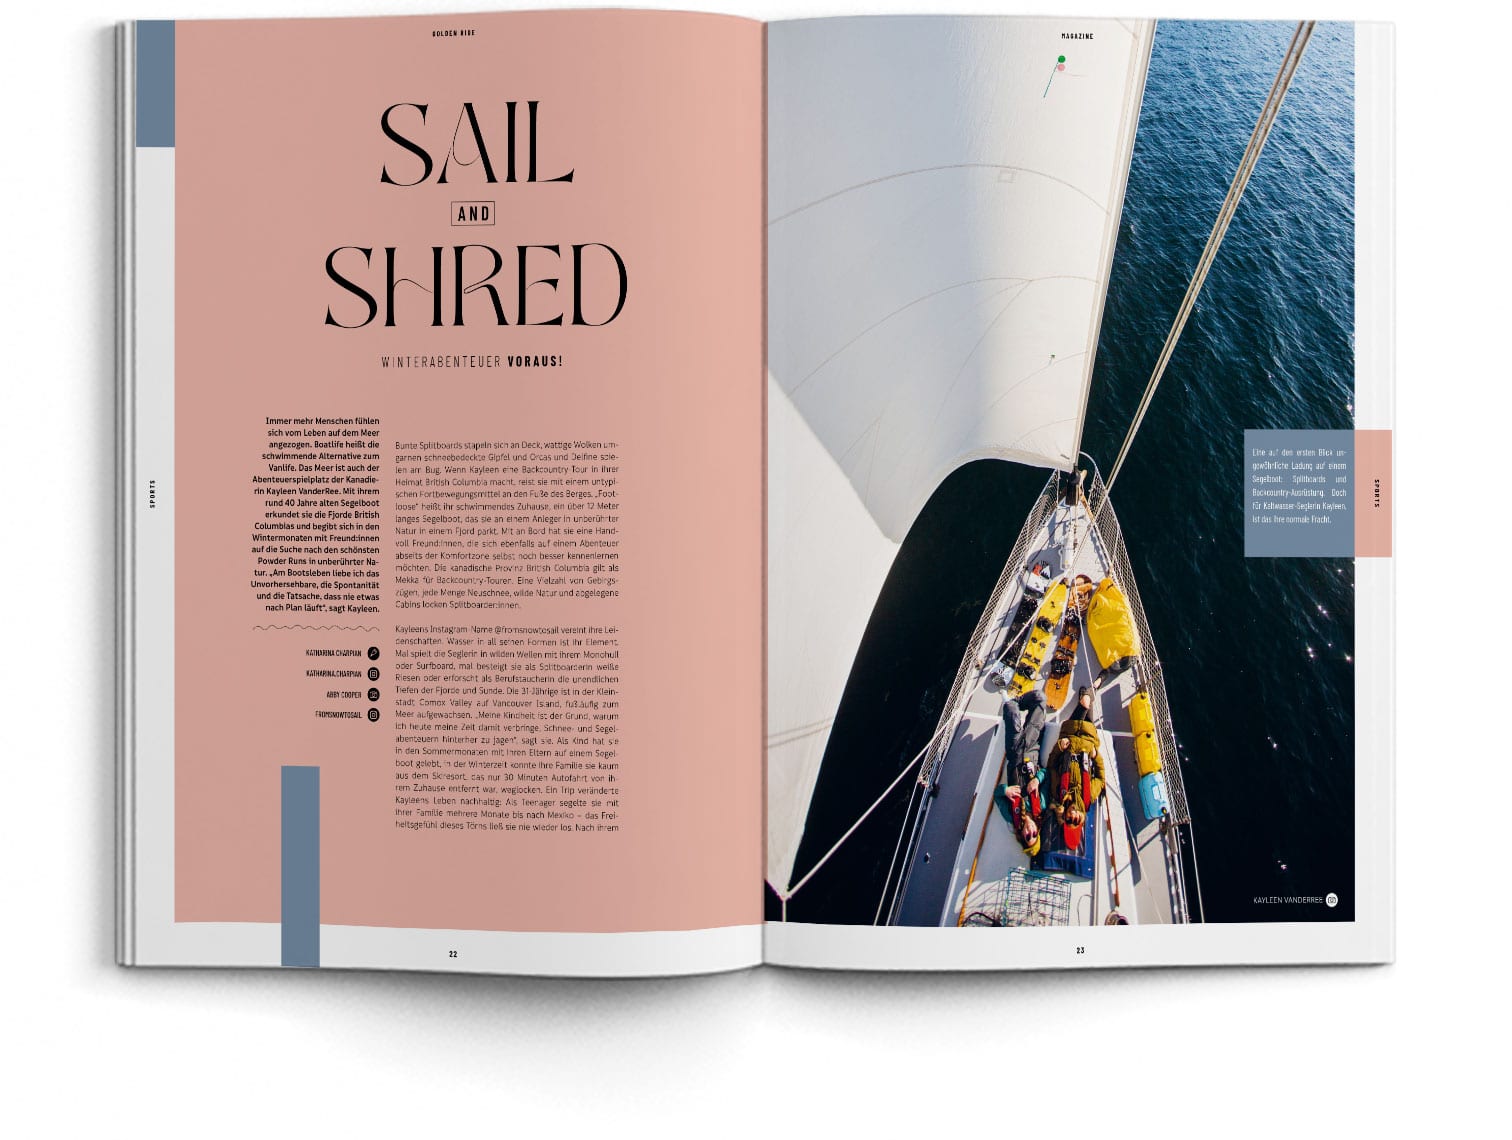 Sail and Shred Snowboard Story